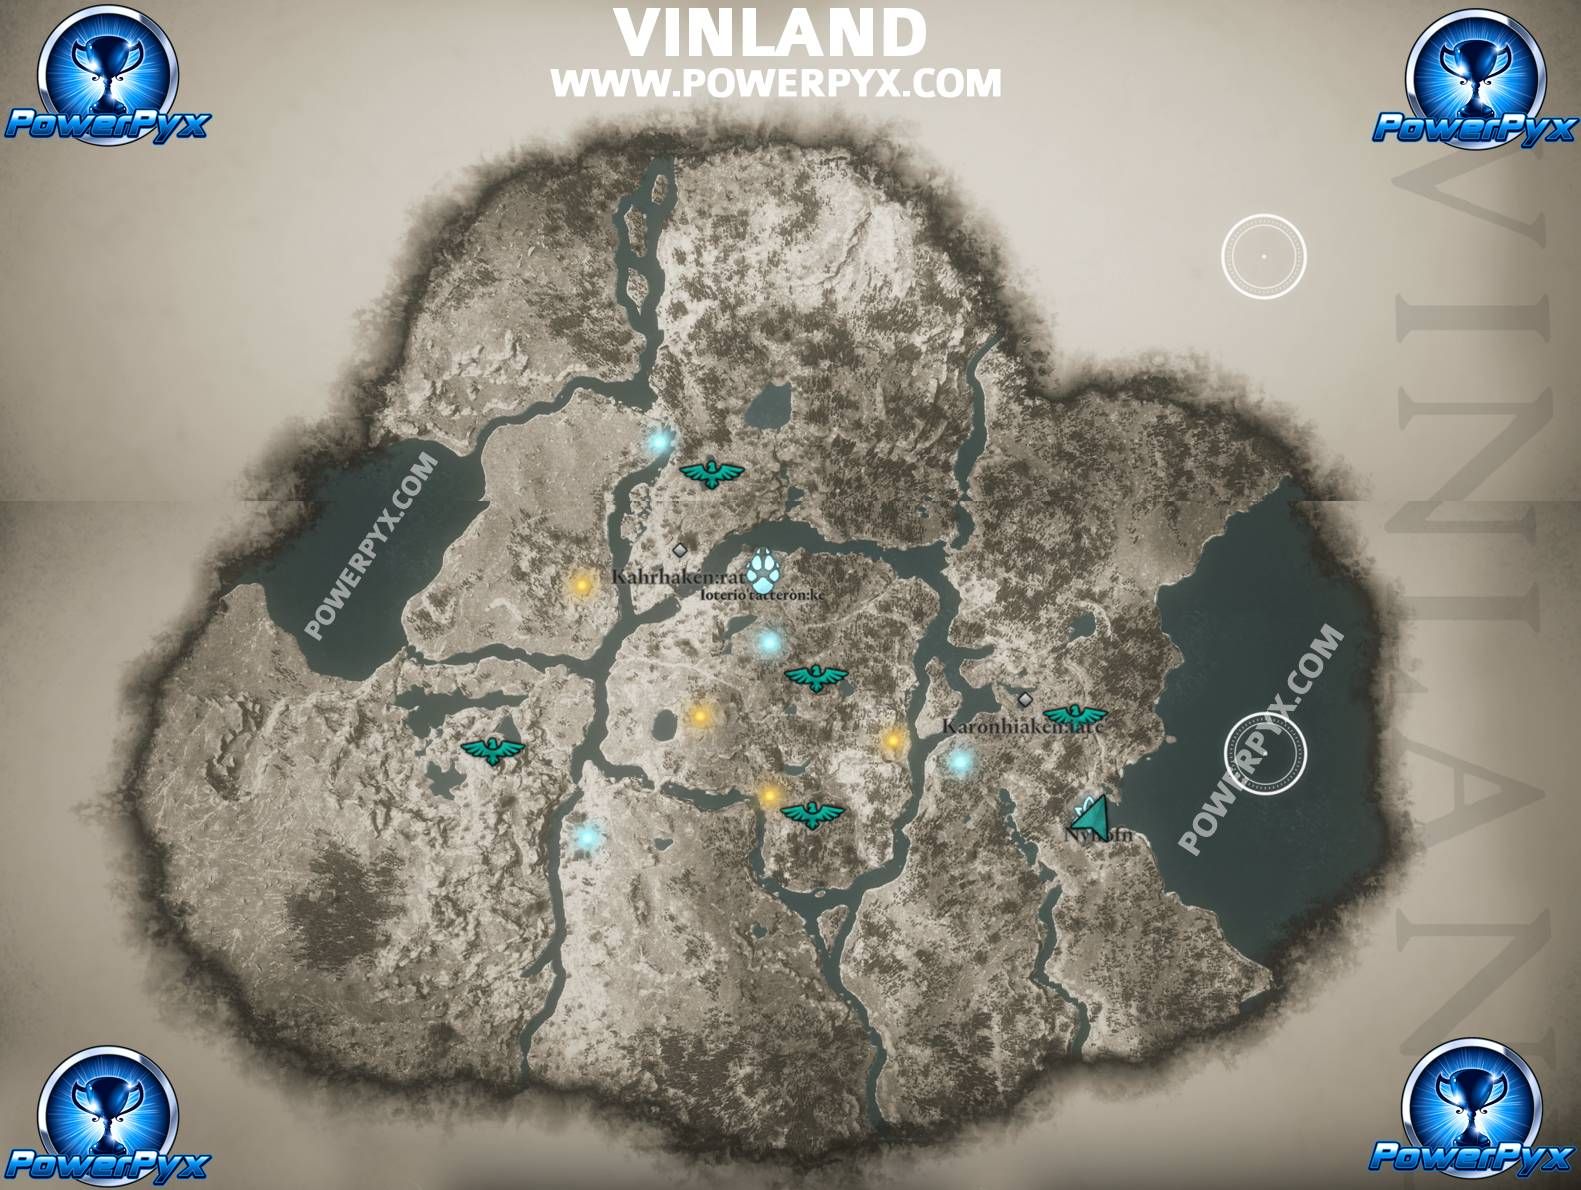 Assassins Creed Valhalla Full Map Revealed (Including Asgard Jotunheim)